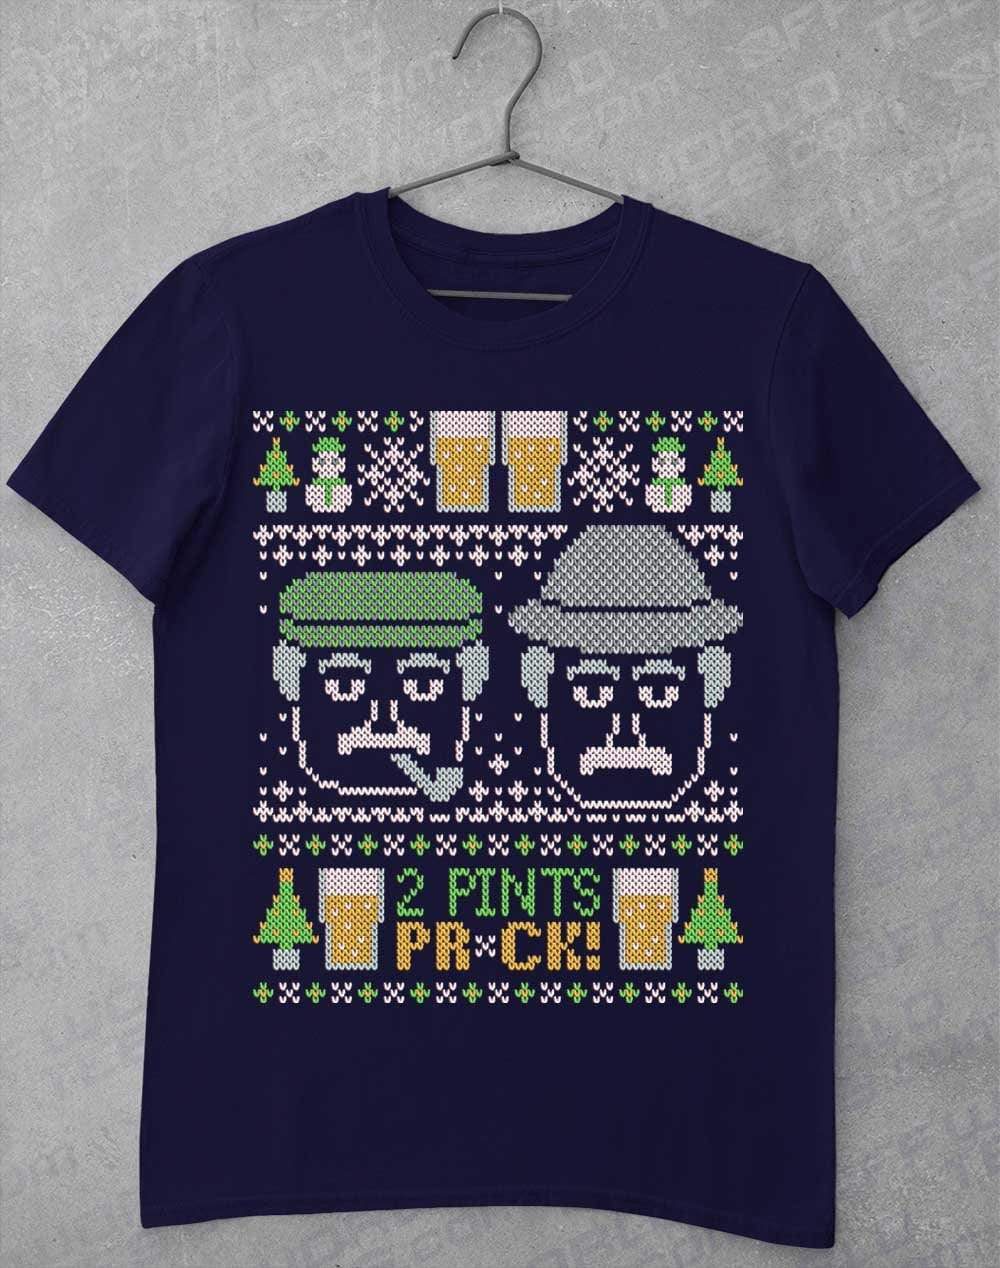 Craiglang Christmas 2 Pints Knit Pattern T-Shirt S / Navy  - Off World Tees